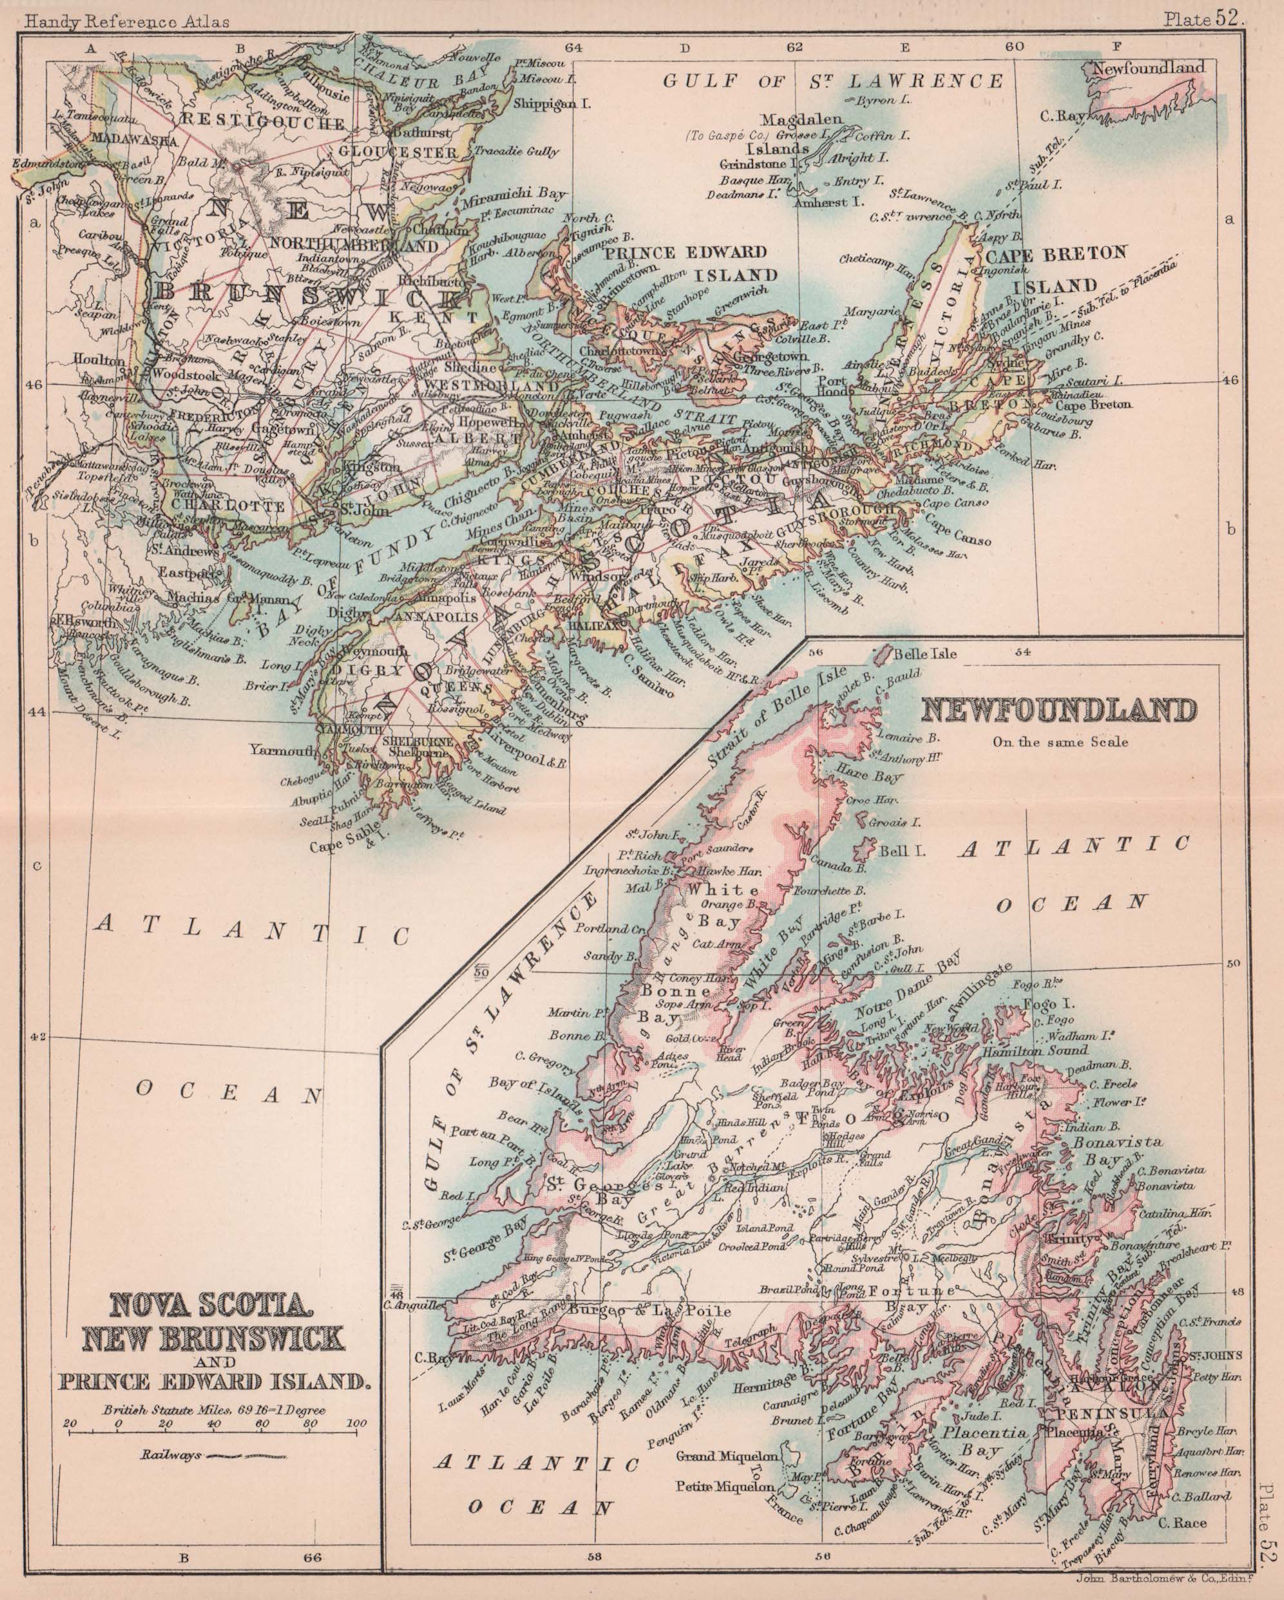 Associate Product Nova Scotia, New Brunswick, PEI & Newfoundland. Canada. BARTHOLOMEW 1893 map